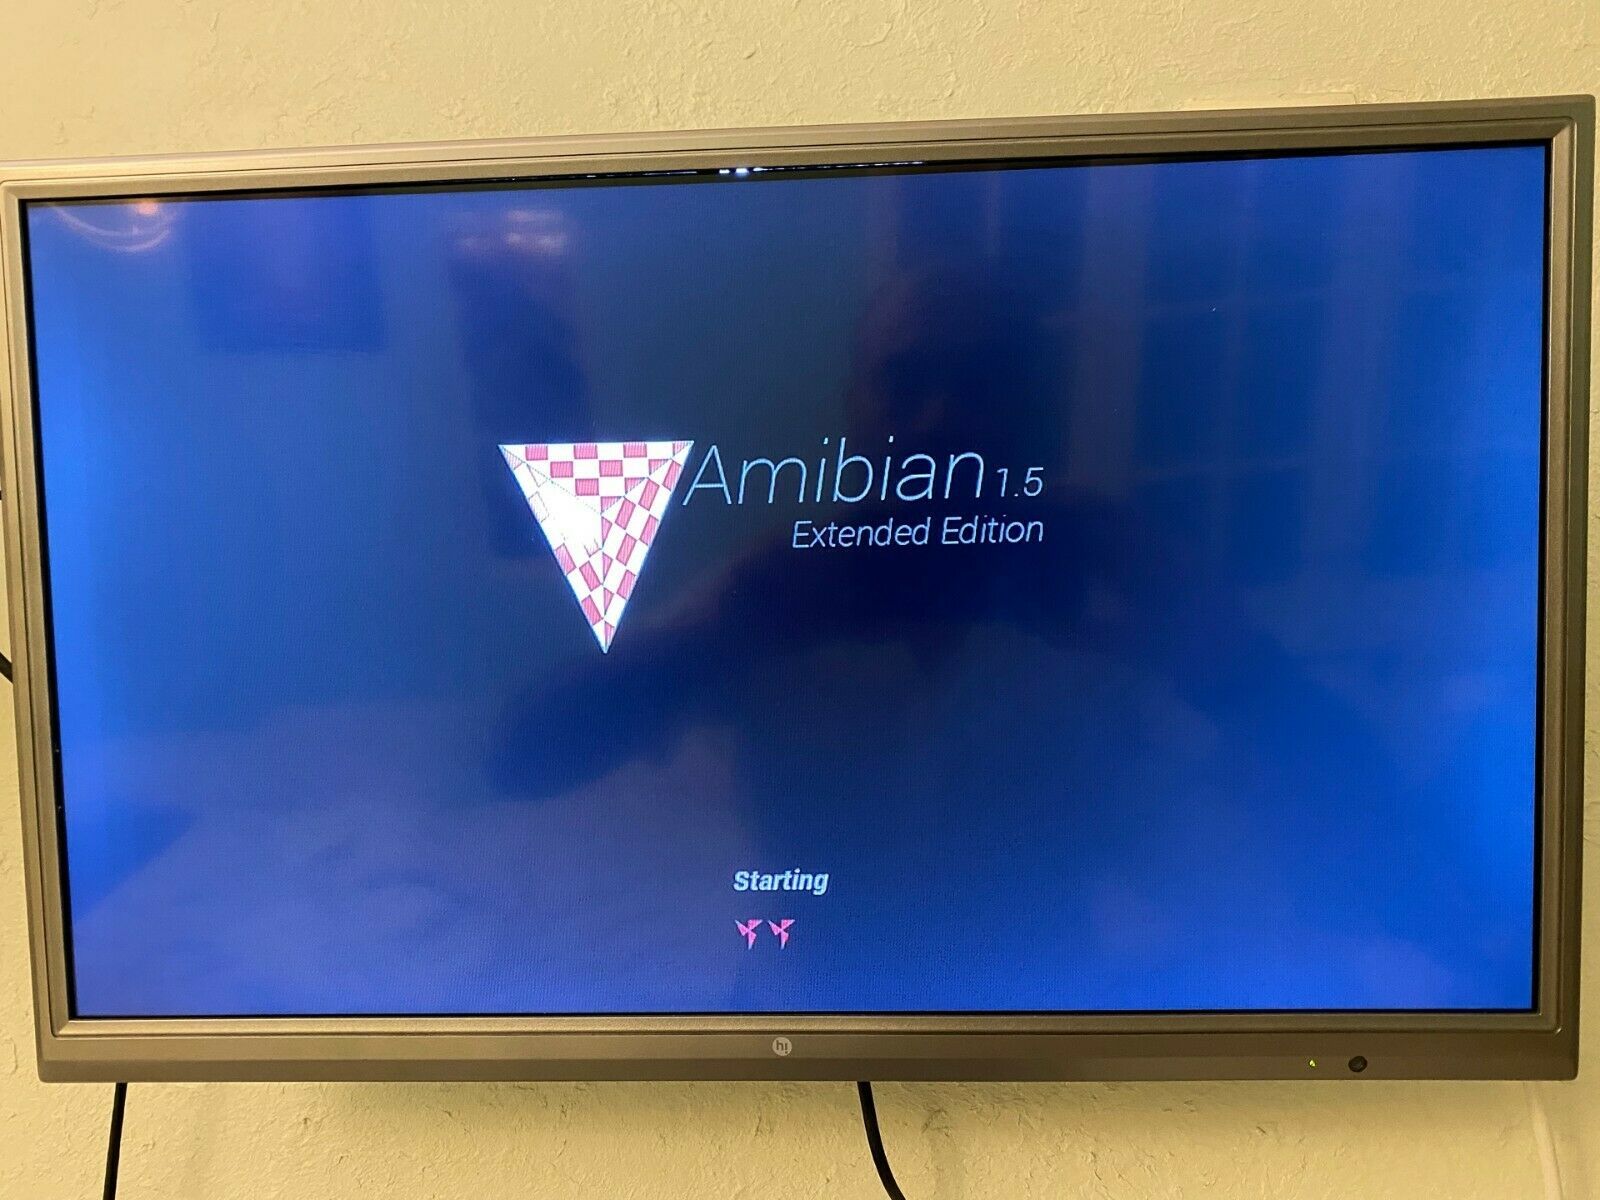 Amibian 1.5 ver extended for Raspberry Pi400